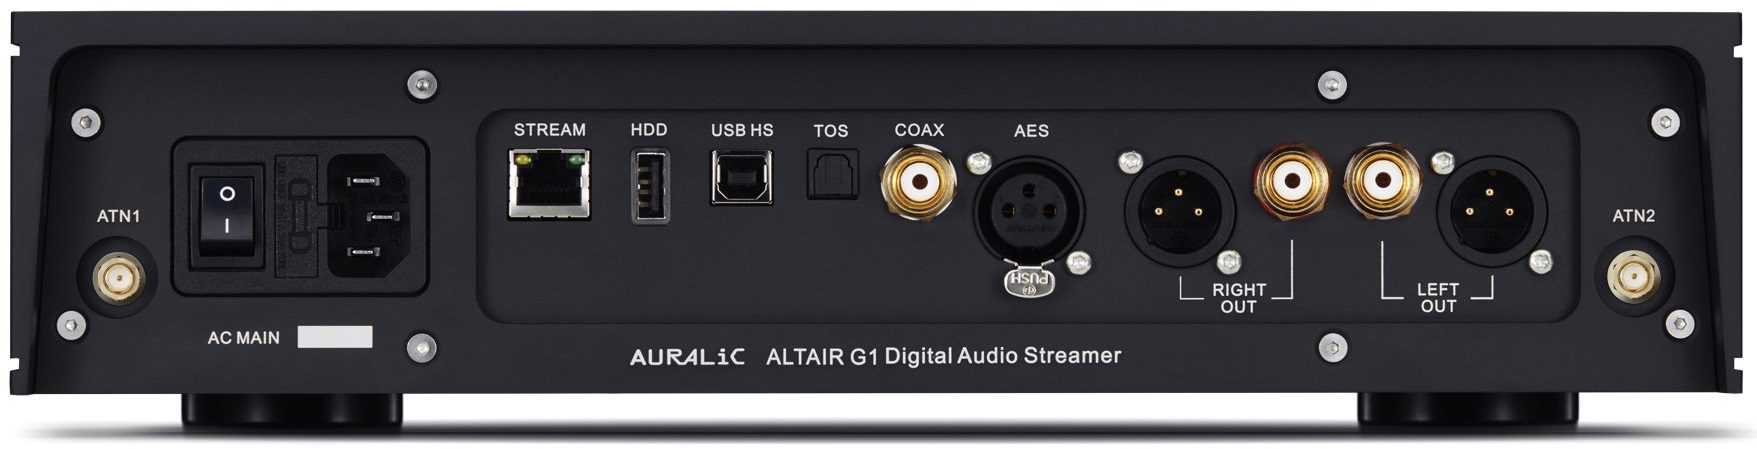 Auralic Altair G1 – 2TB SSD - achterkant - Audio streamer